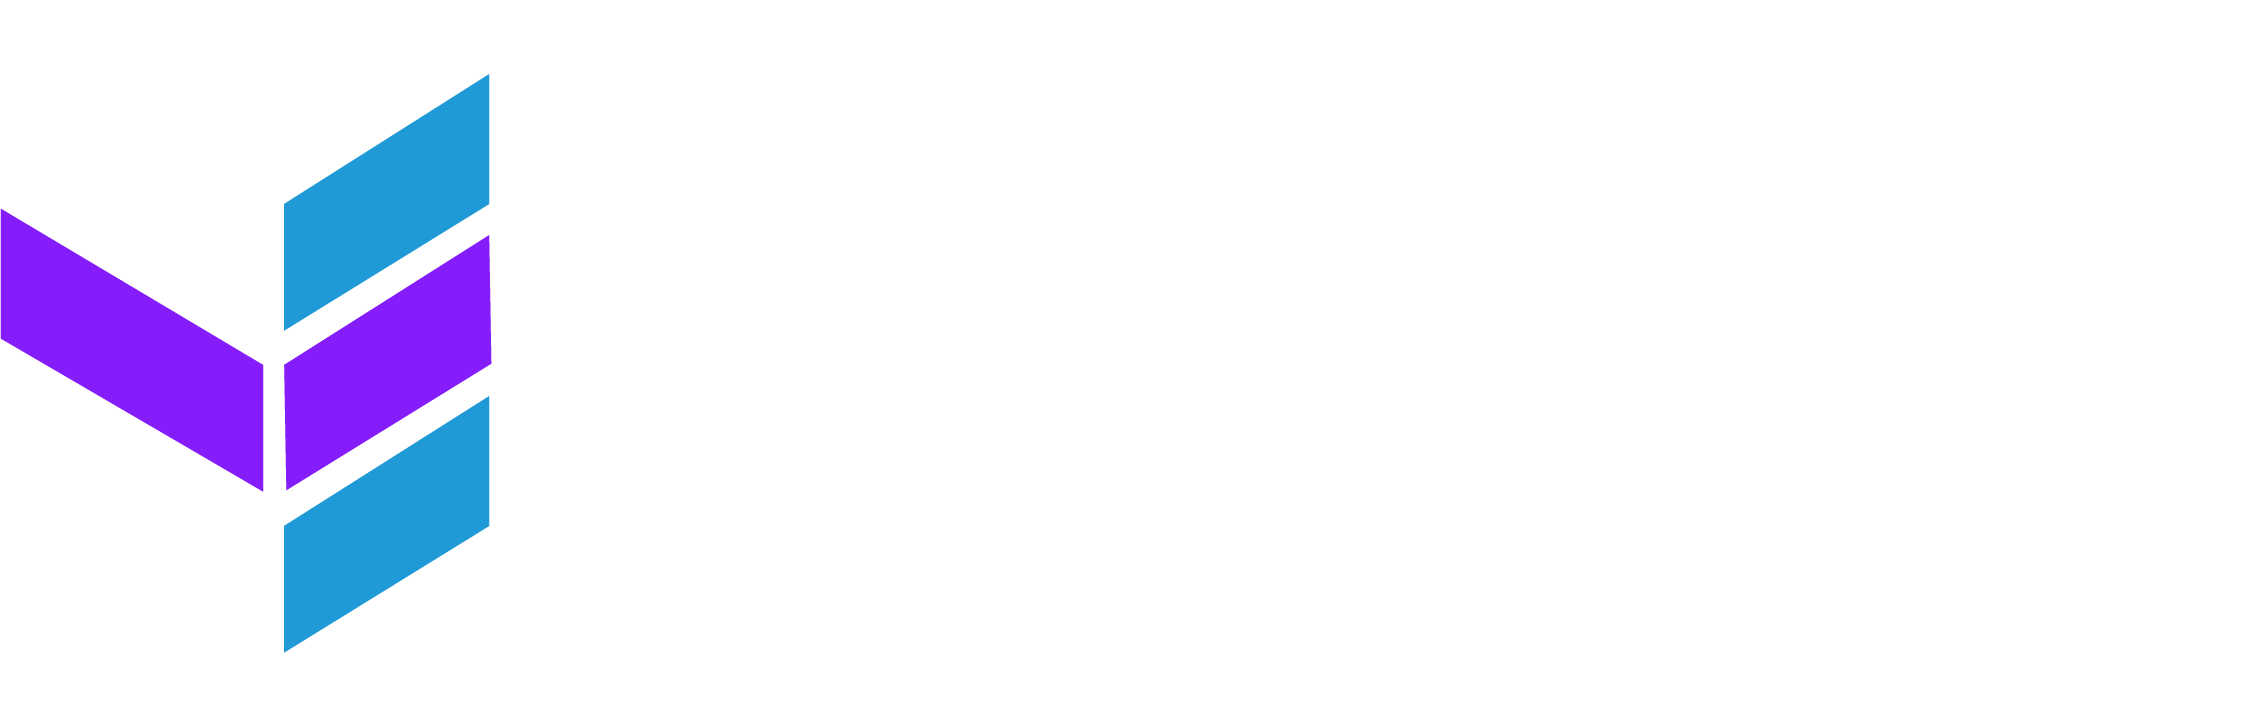 Leading Edge Innovations